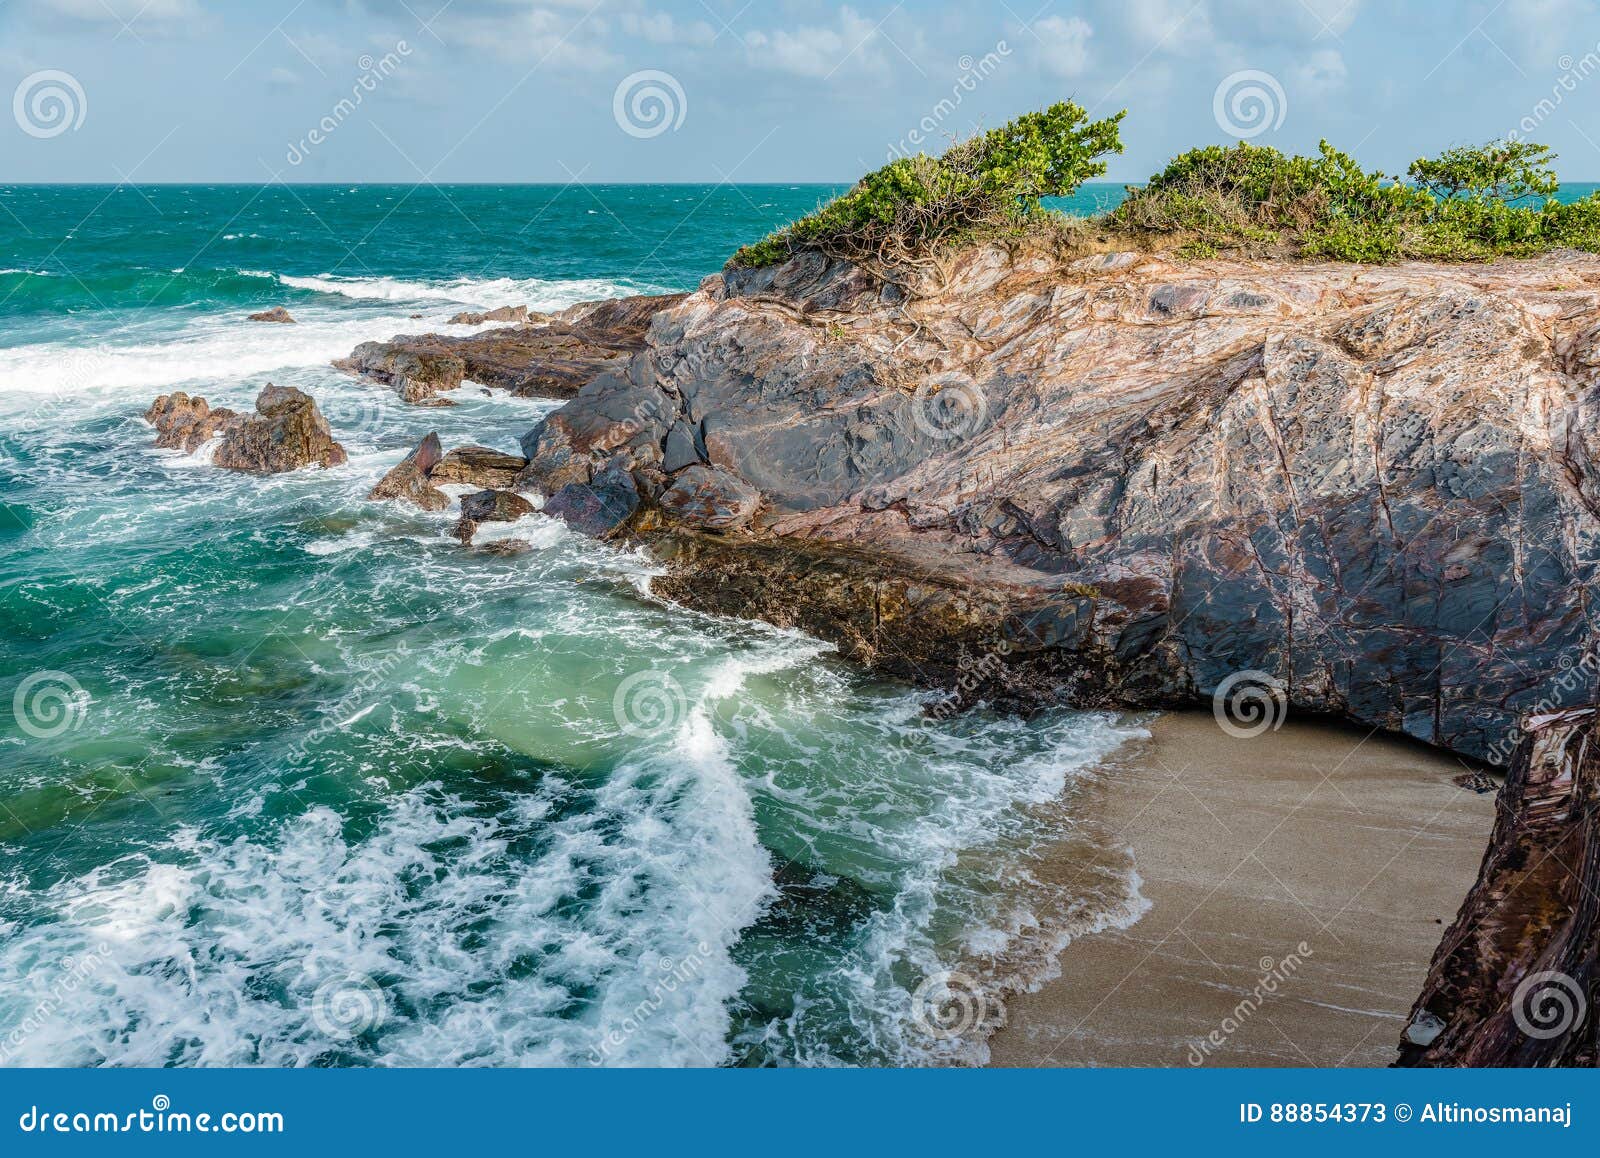 toco trinidad and tobago west indies rough sea beach cliff edge panorama